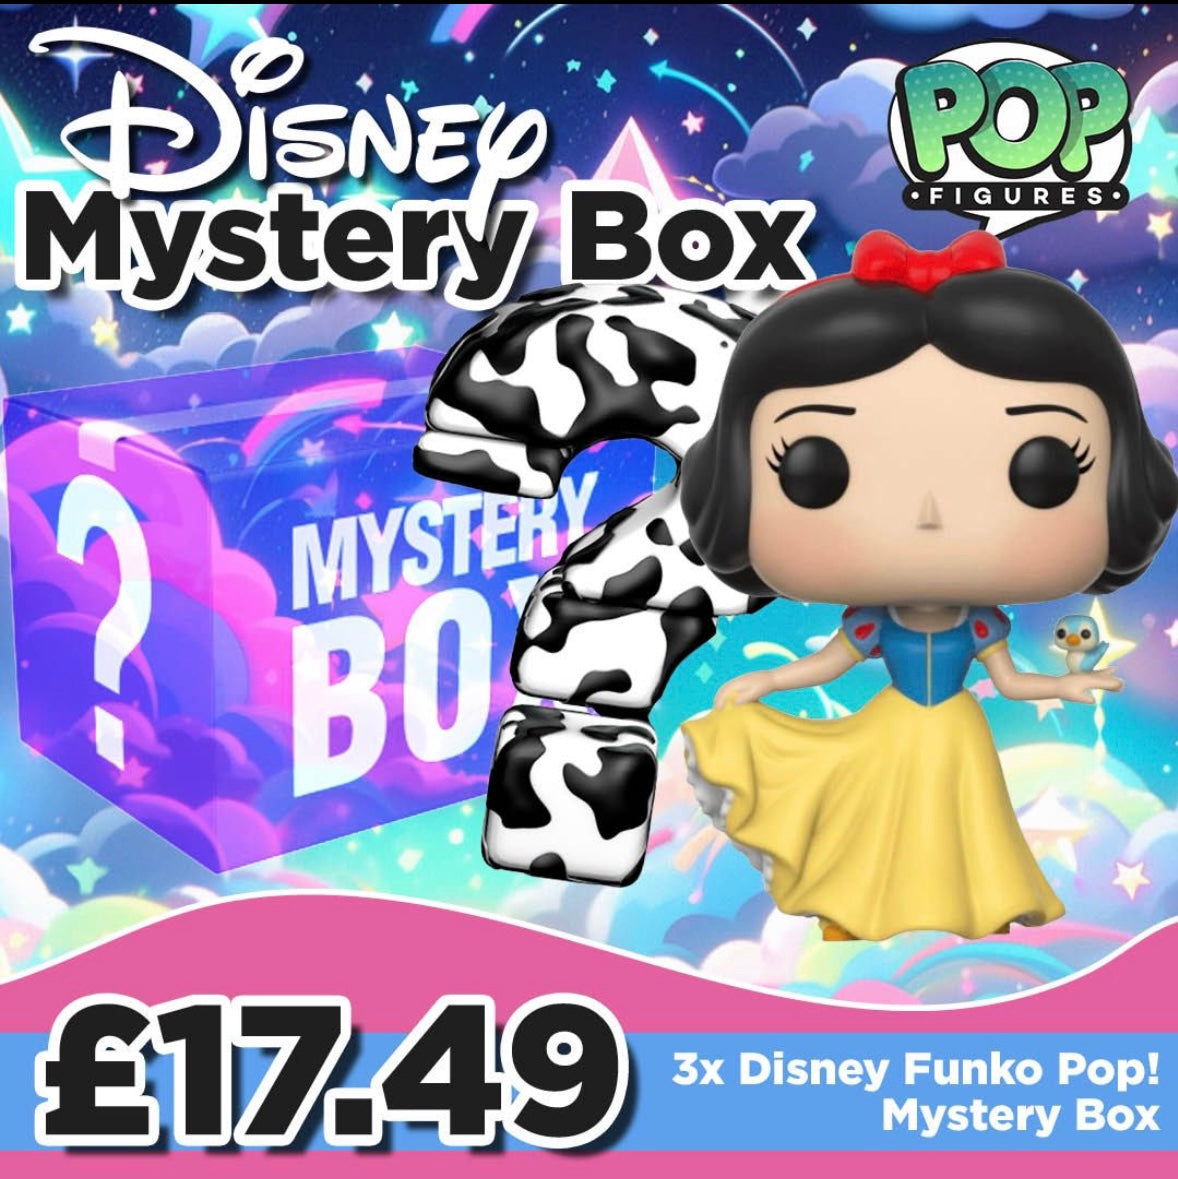 3 Disney Funko Pop Mystery Box!